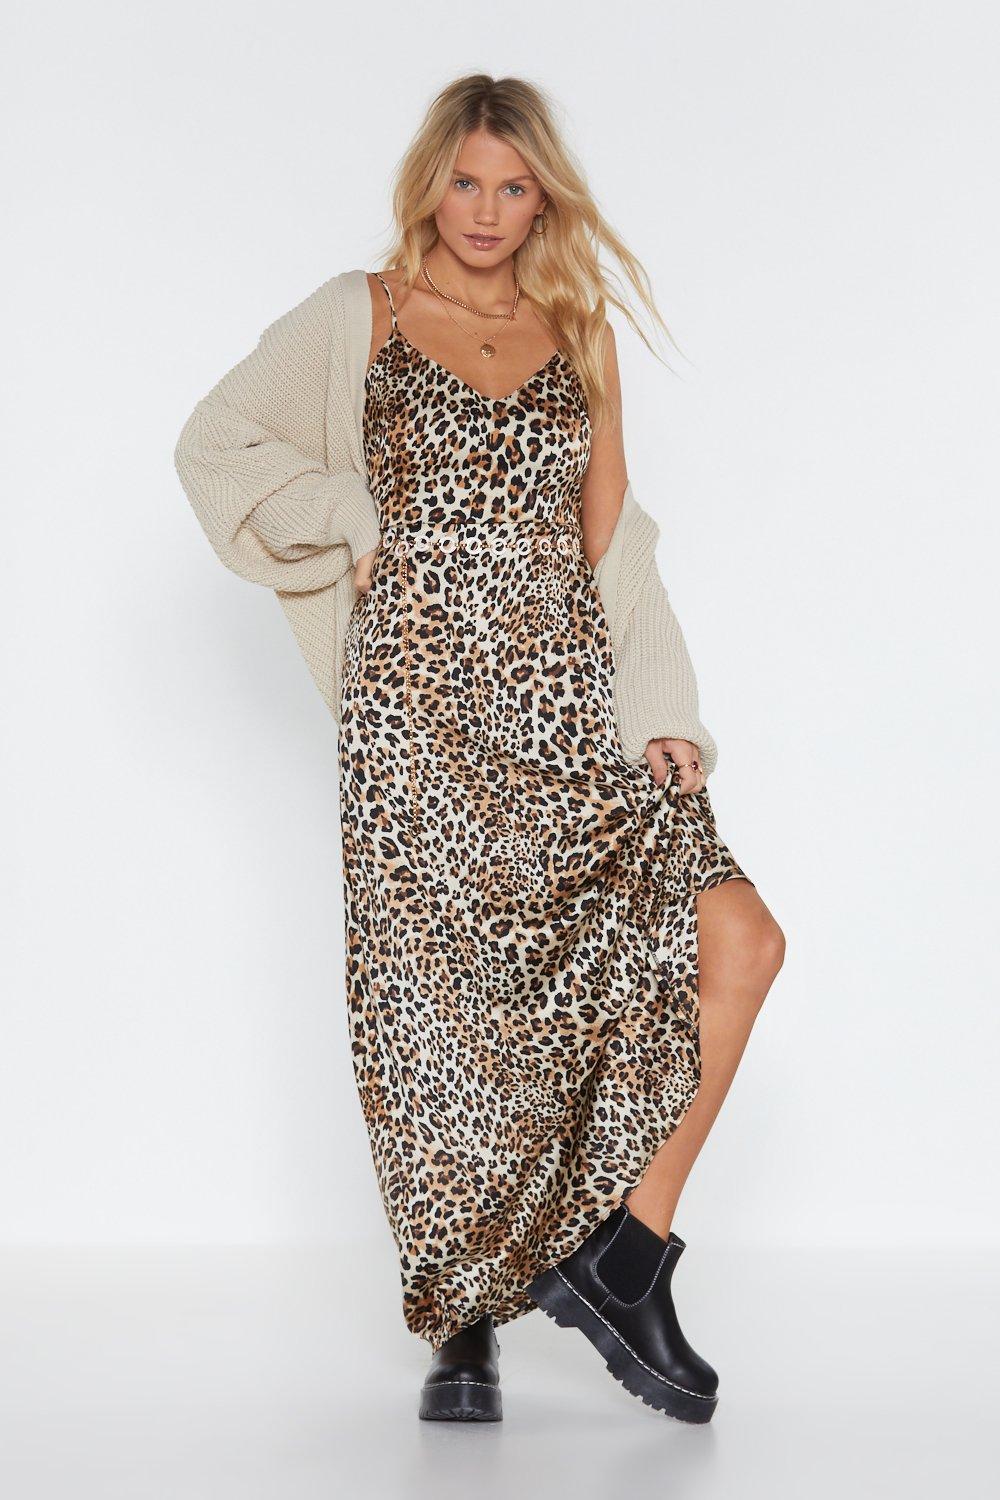 cheetah print slip dress